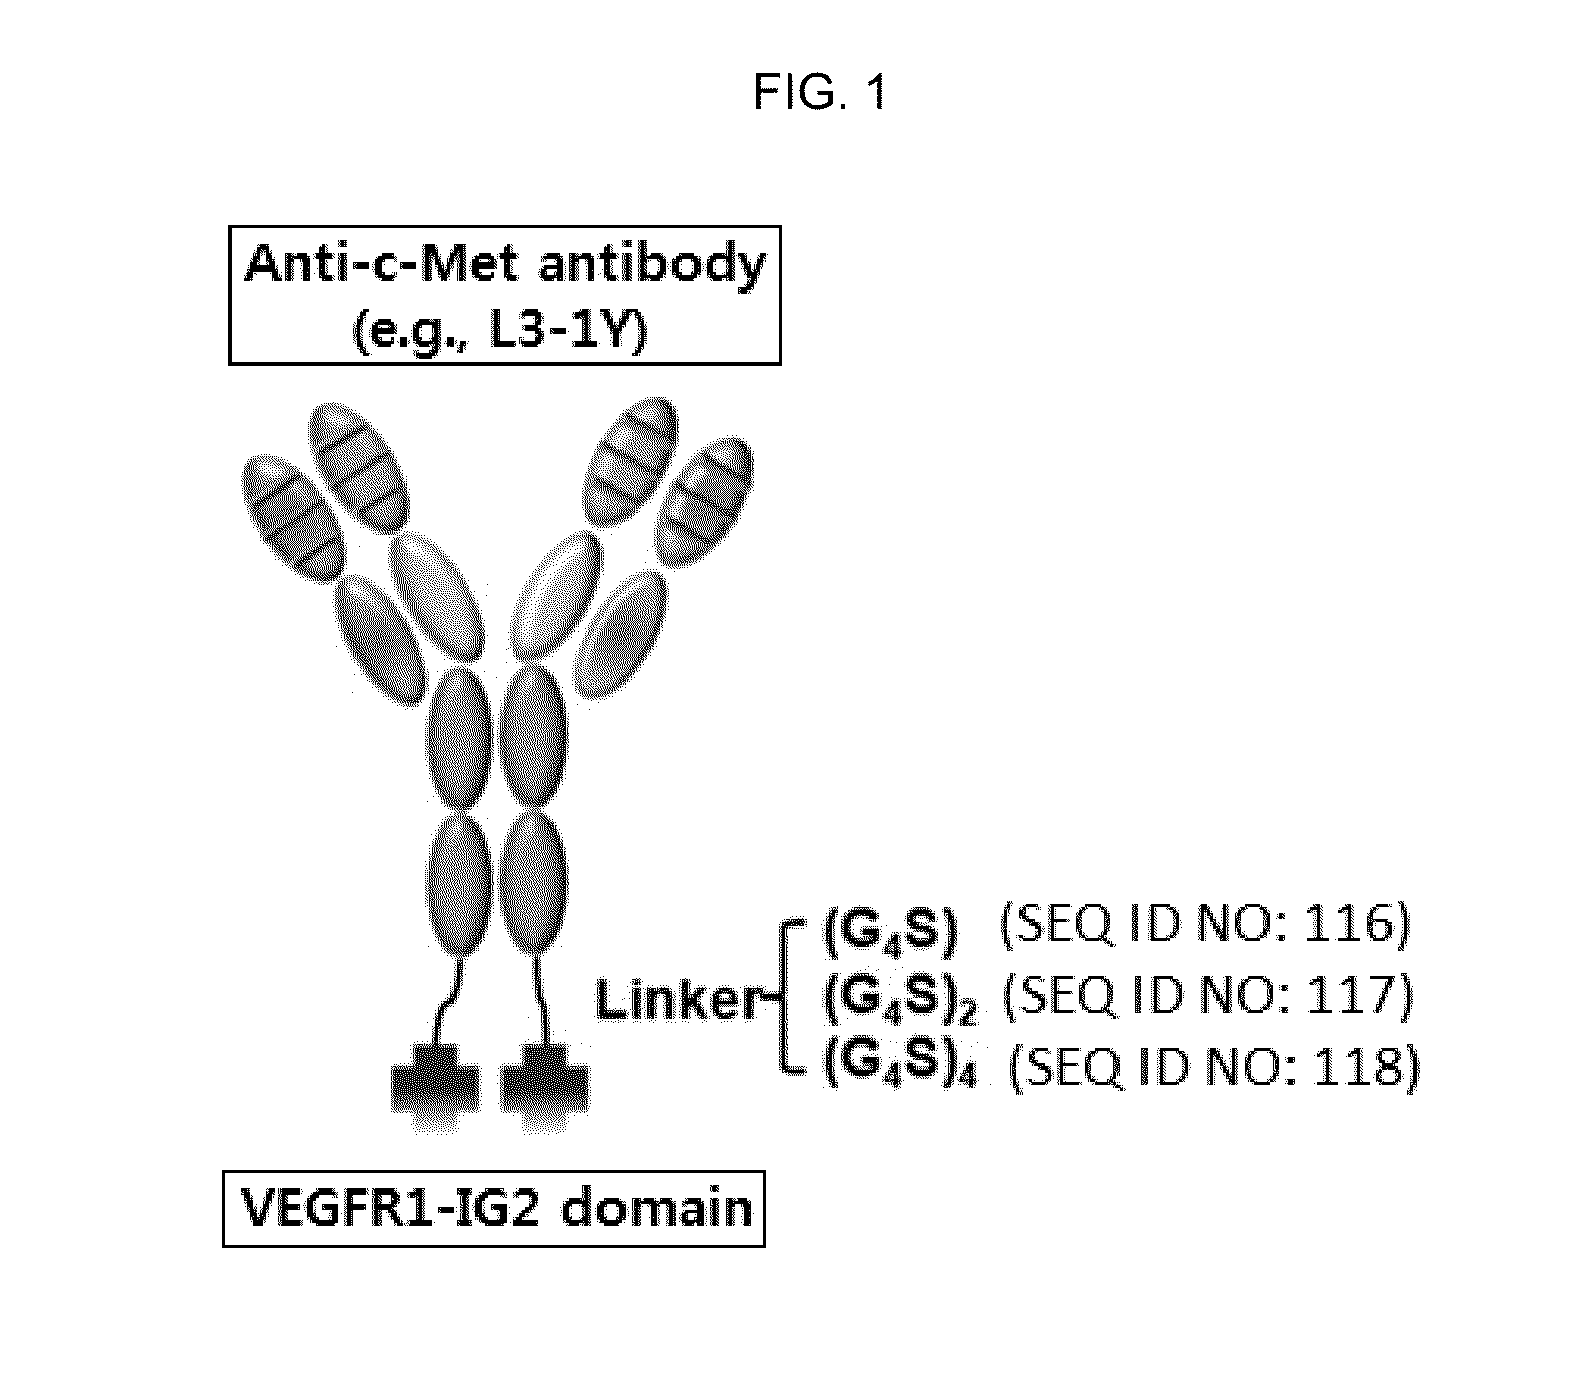 Fusion protein comprising Anti-c-met antibody and vegf-binding fragment